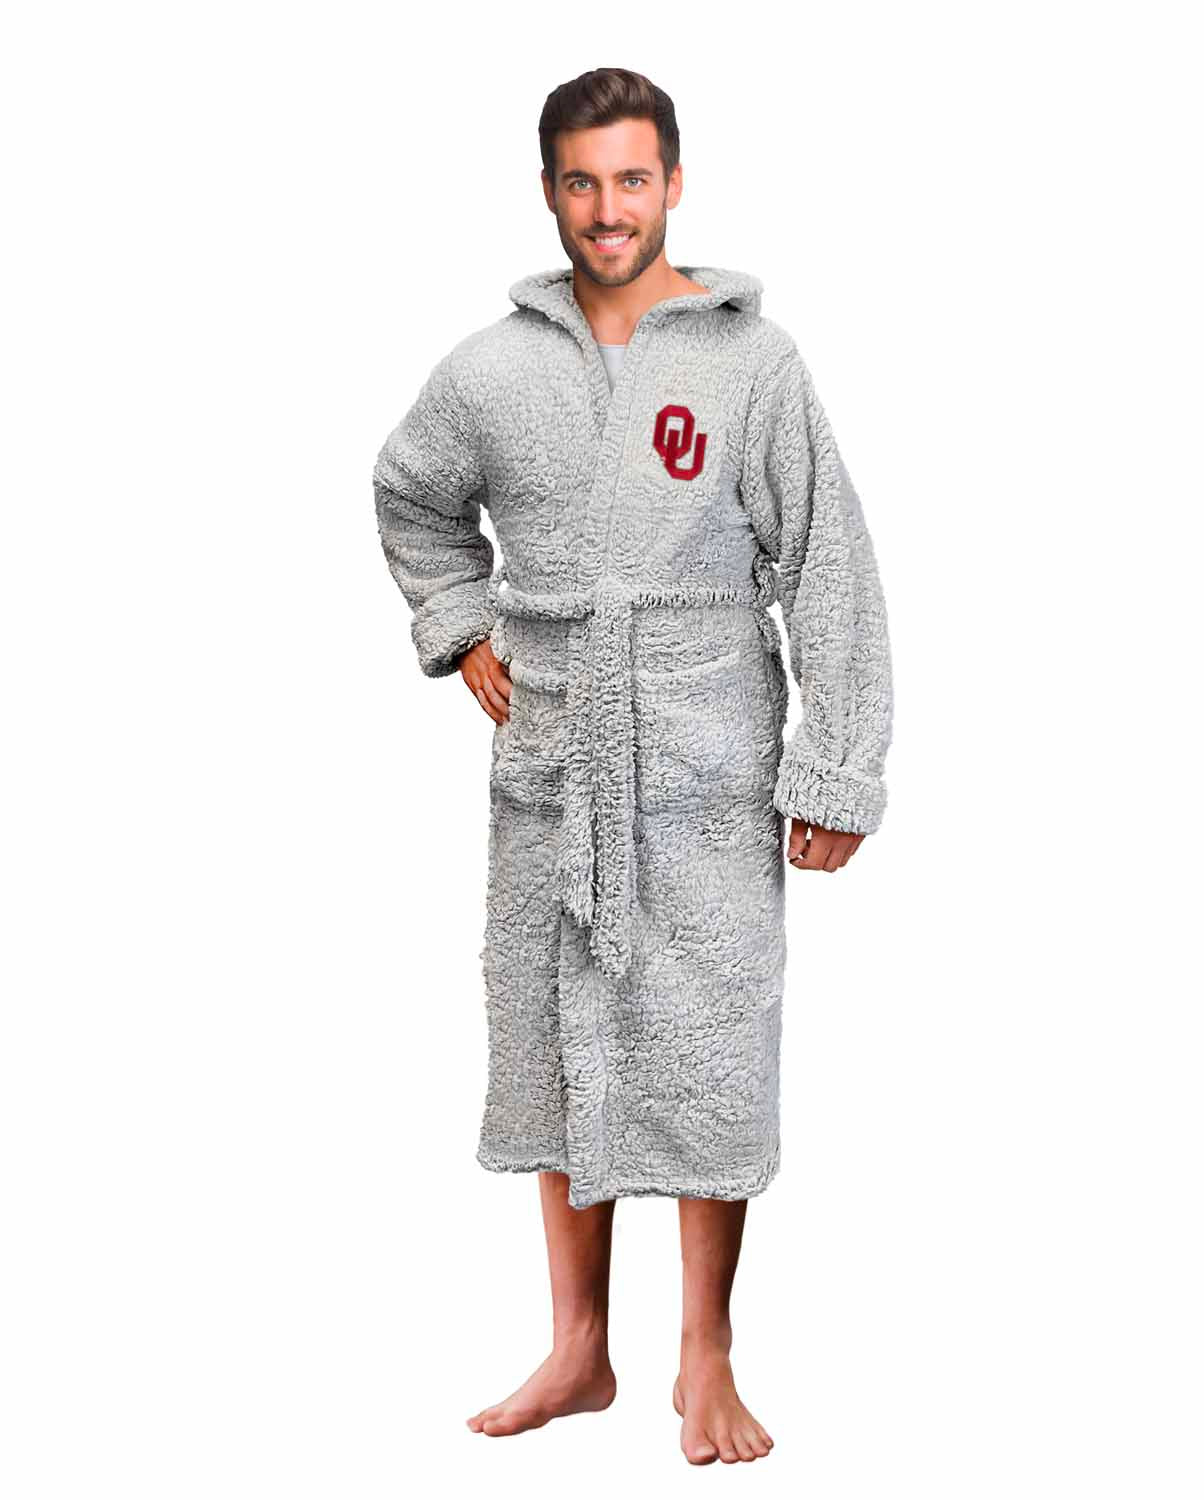 Oklahoma Sooners NCAA Adult Plush Hooded Robe with Pockets - Gray